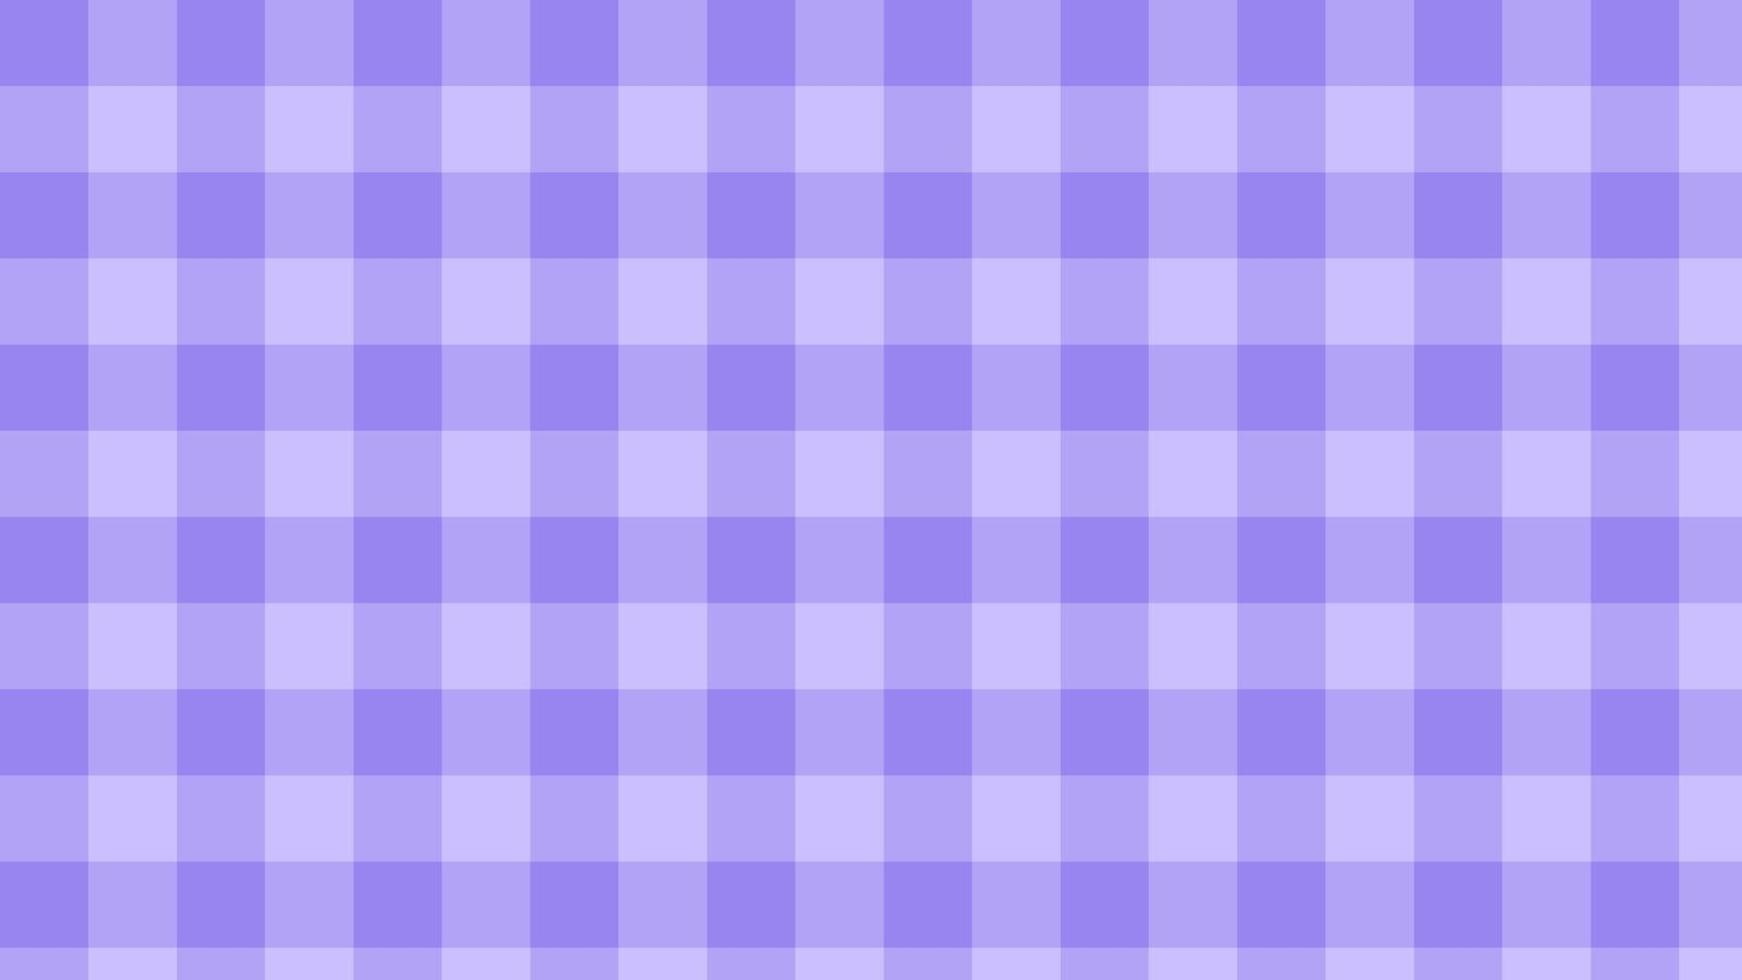 A purple checkered pattern on white background - Light purple